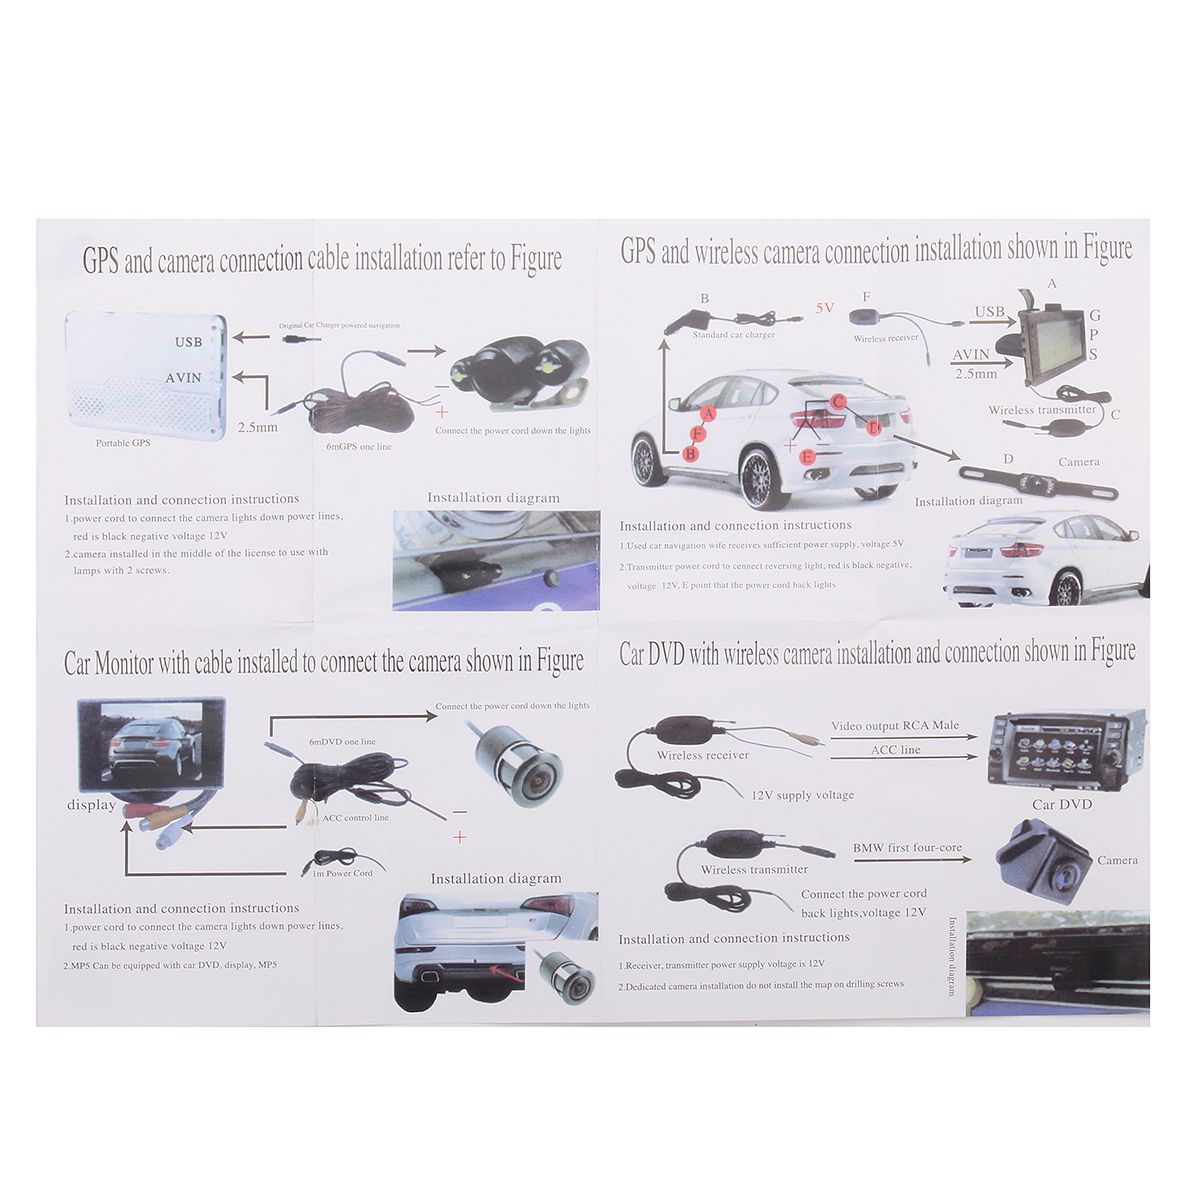 Car-Wireless-Rear-View-Reverse-Parking-Backup-Camera-For-VW-Tiguan-Bora-Porsche-Cayenne-1480152